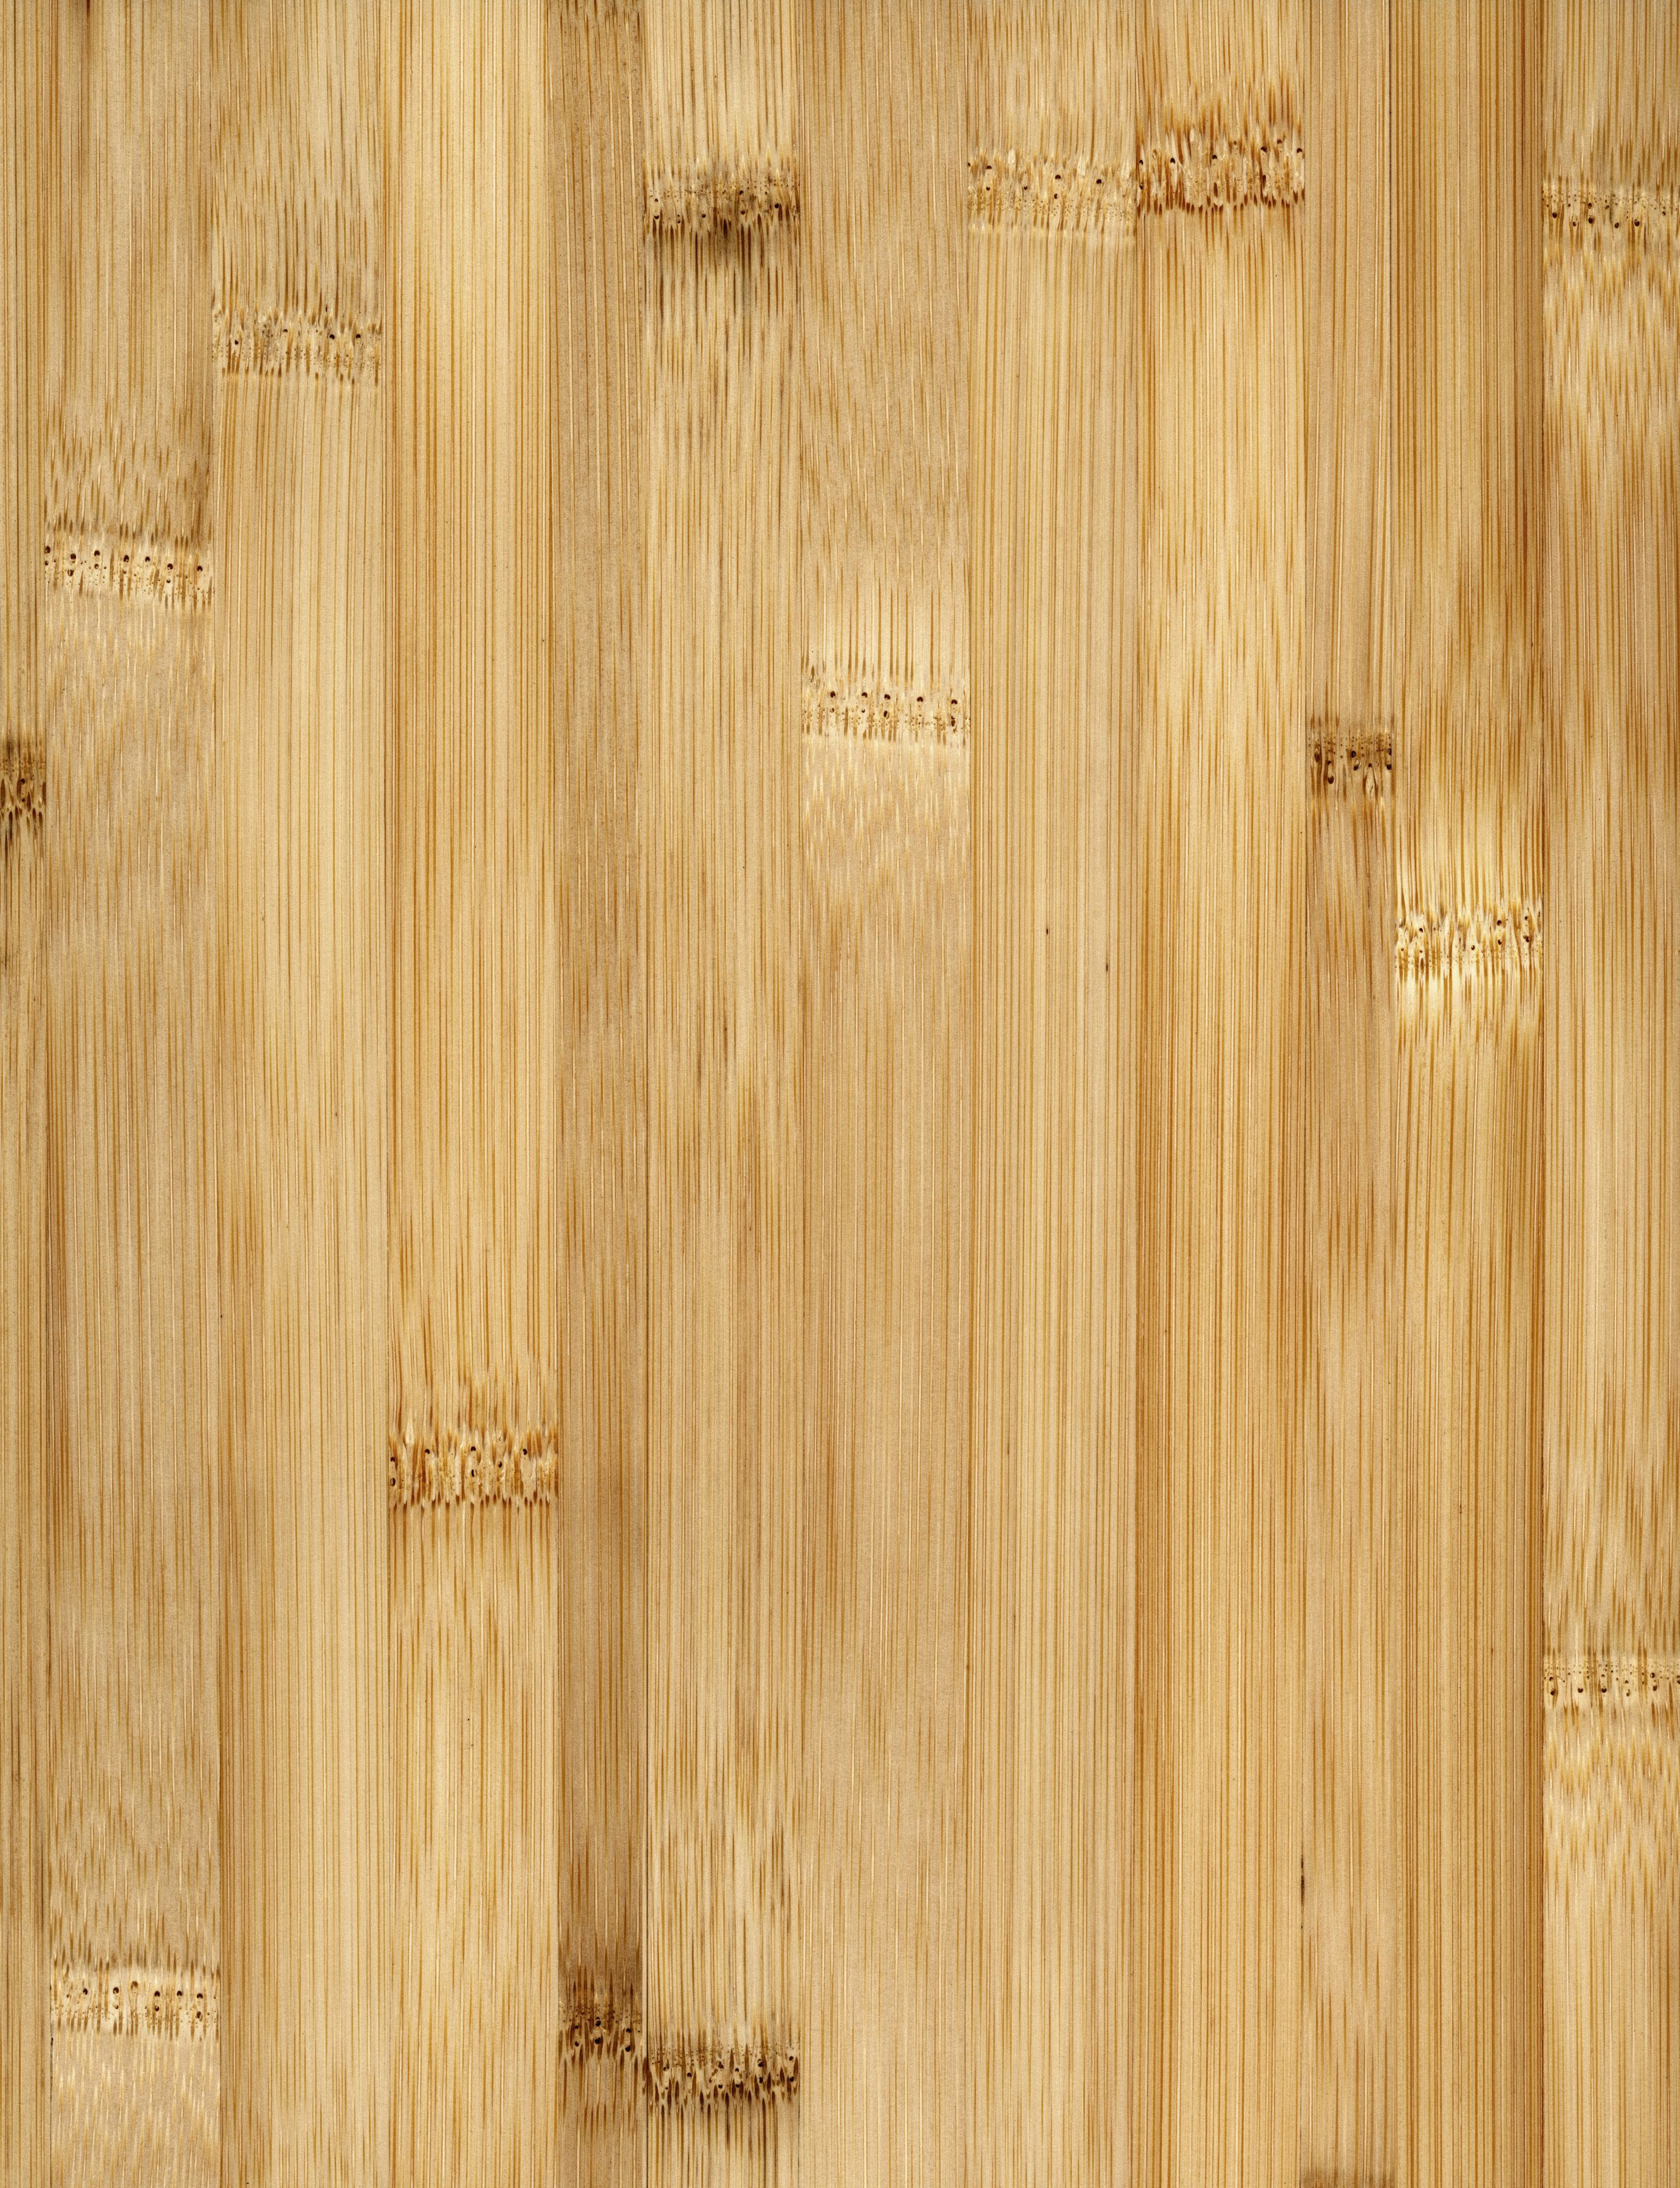 19 Stylish Bamboo Flooring Cheaper Than Hardwood 2024 free download bamboo flooring cheaper than hardwood of bamboo flooring the basics throughout bamboo floor full frame 200266305 001 588805c03df78c2ccdd4c706